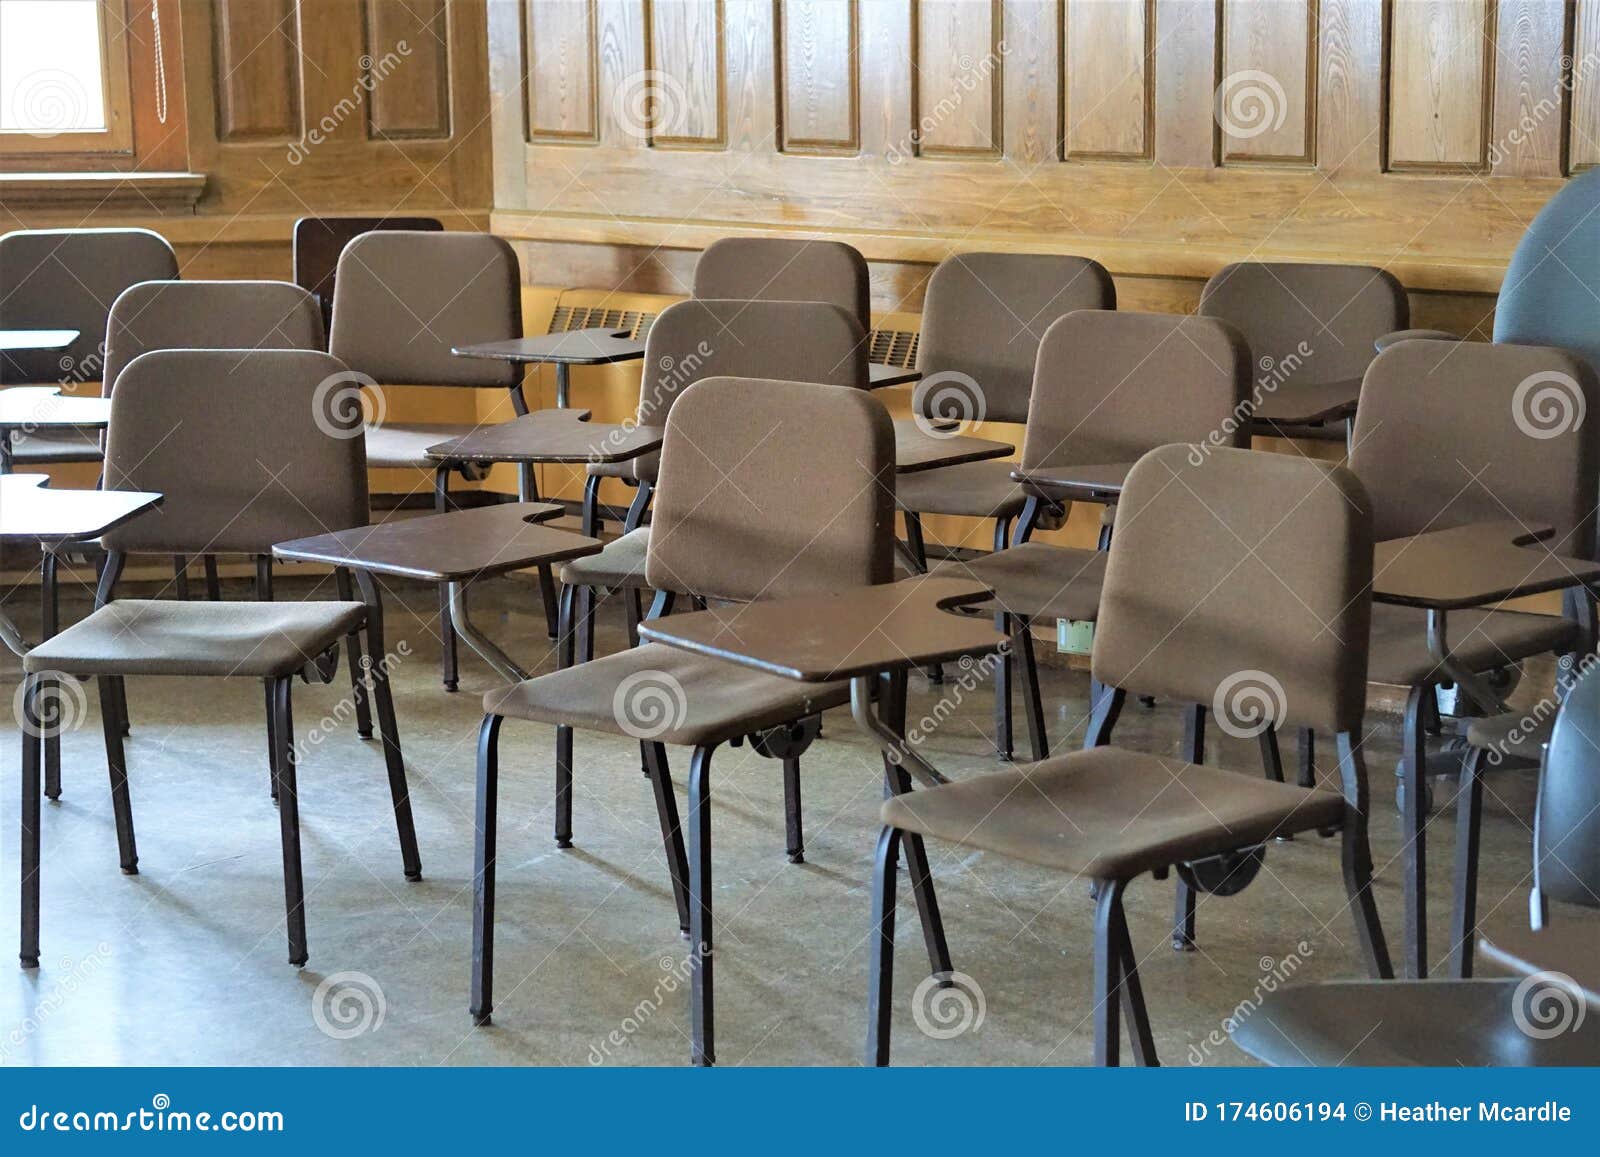 Empty Writing Desks In Classroom Stock Photo Image Of Classroom